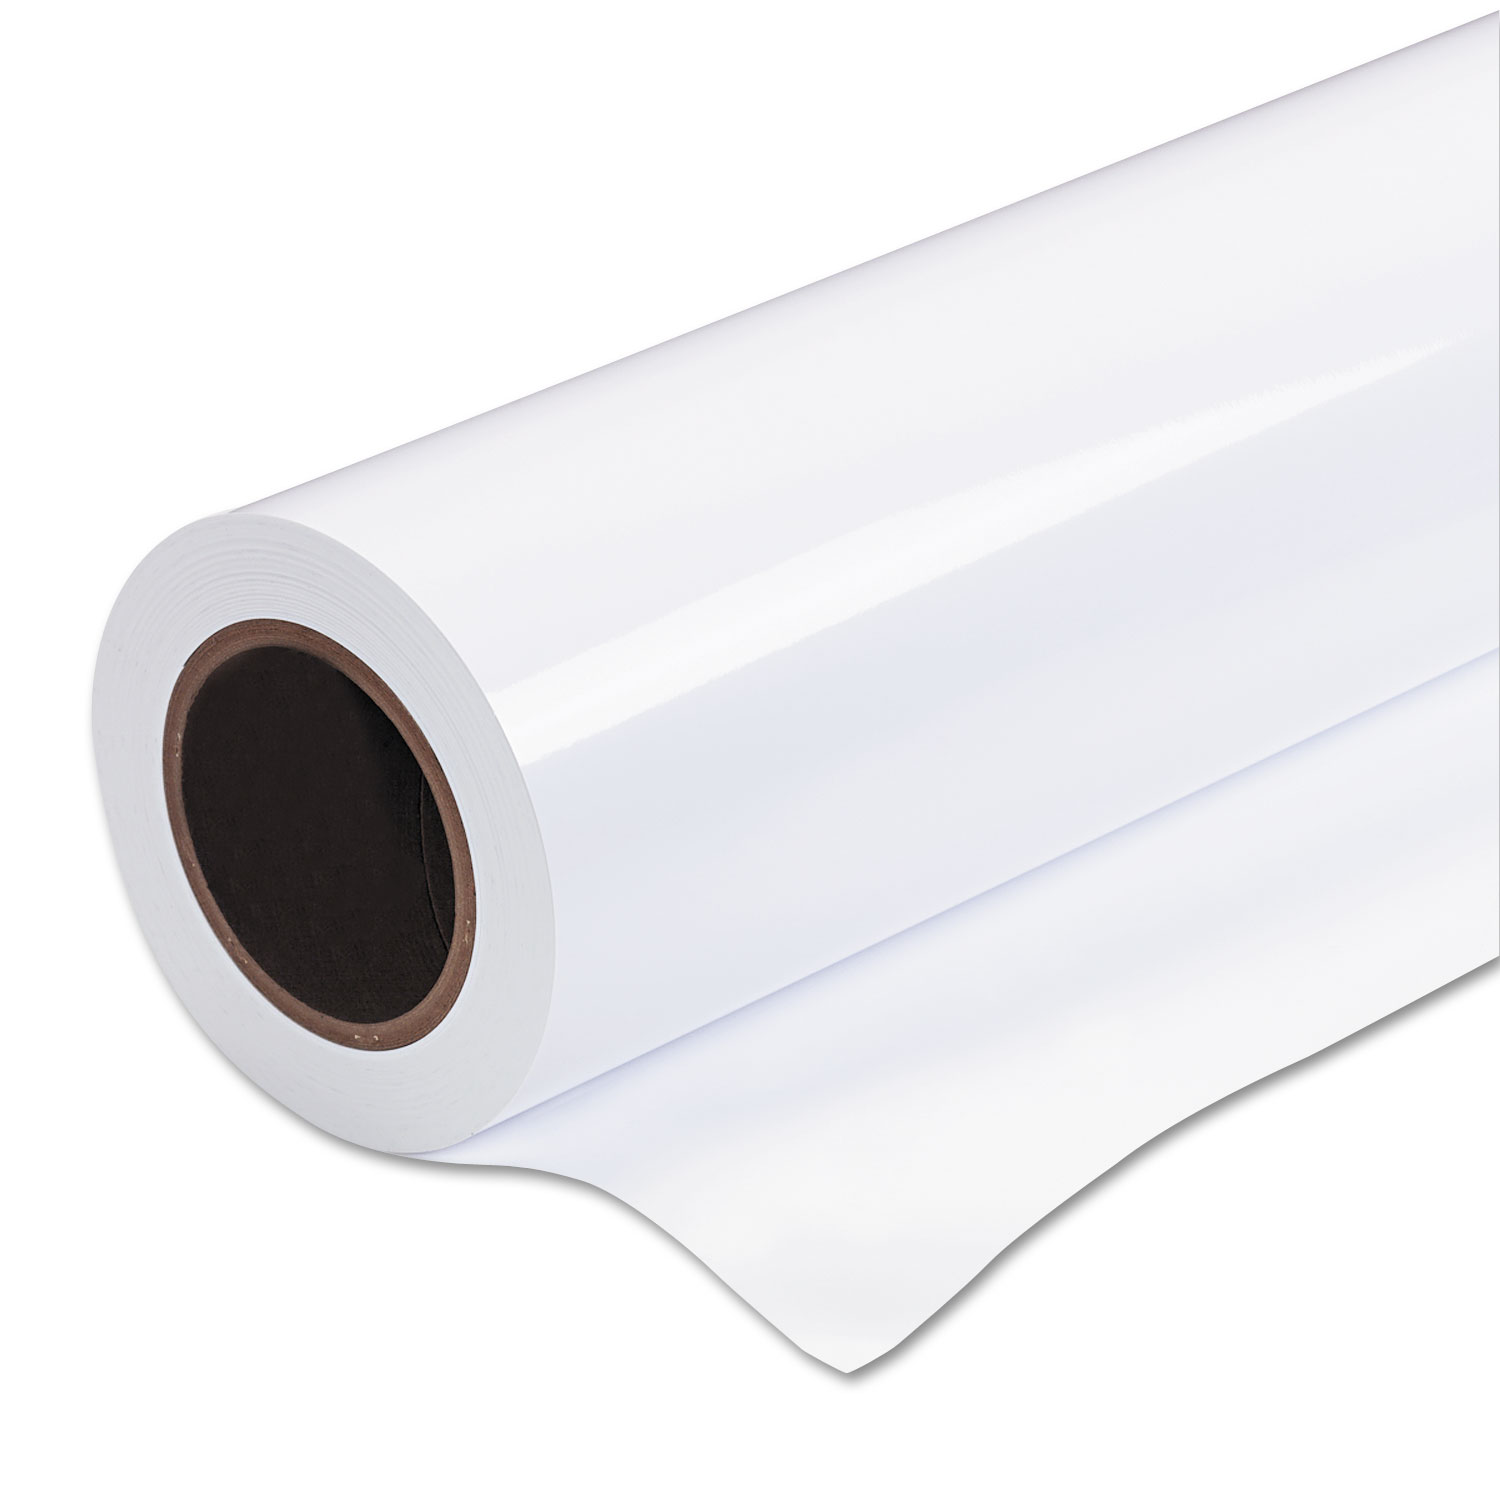  Epson S041390 Premium Glossy Photo Paper Roll, 2 Core, 24 x 100 ft, Glossy White (EPSS041390) 